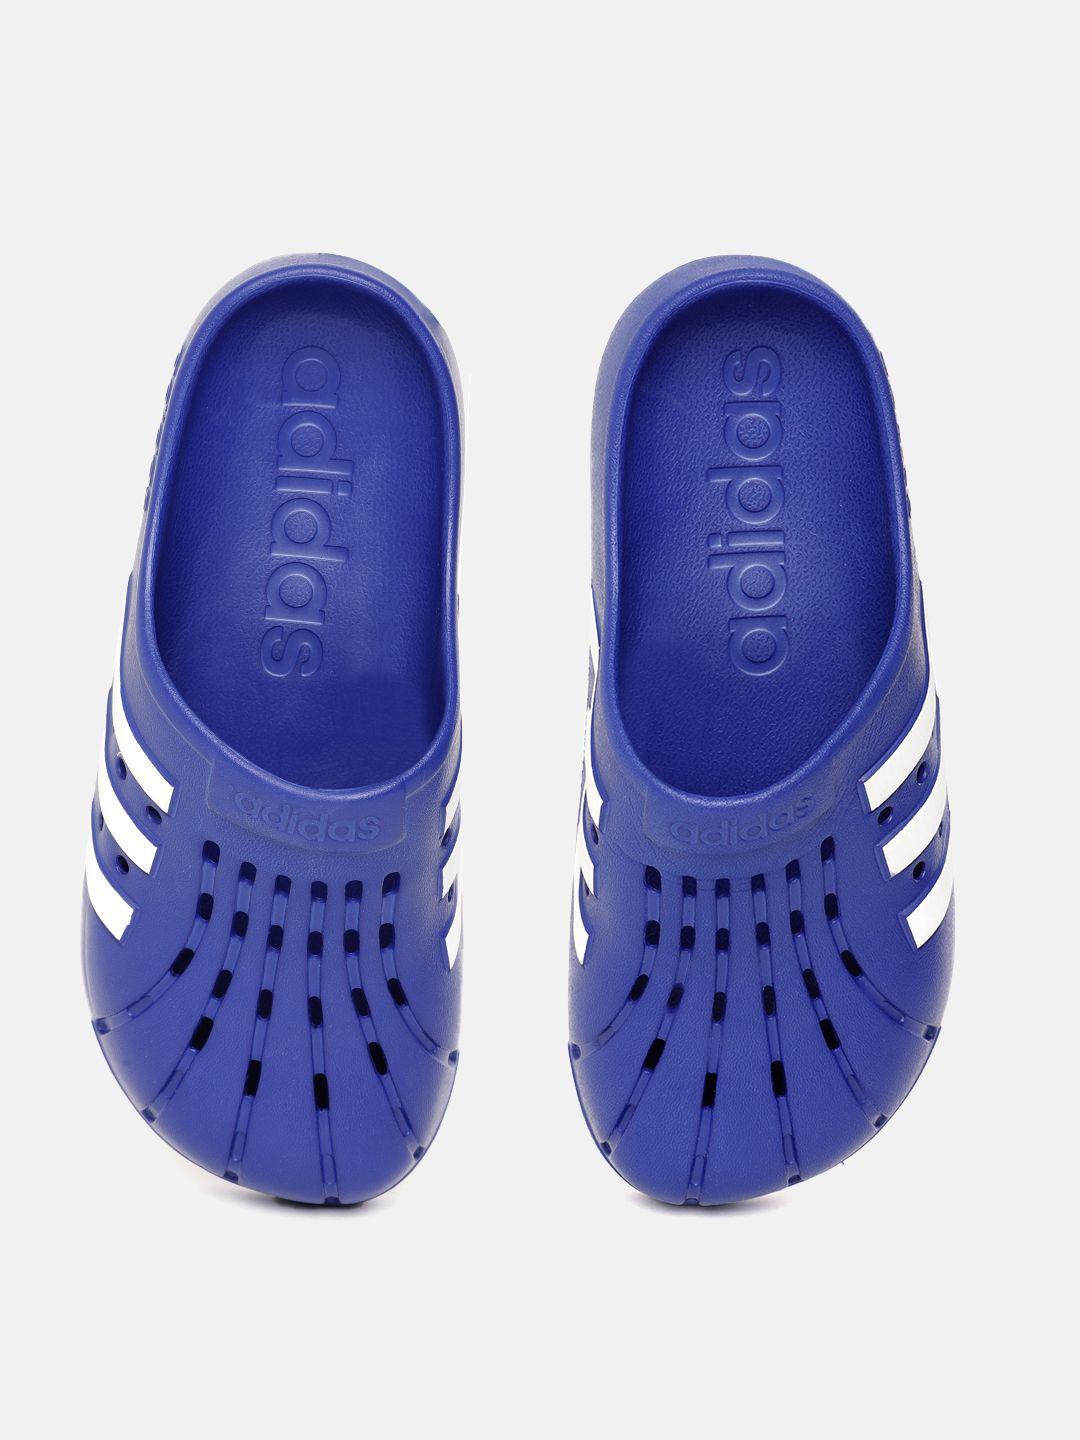 adidas unisex blue laser cuts starlette clogs